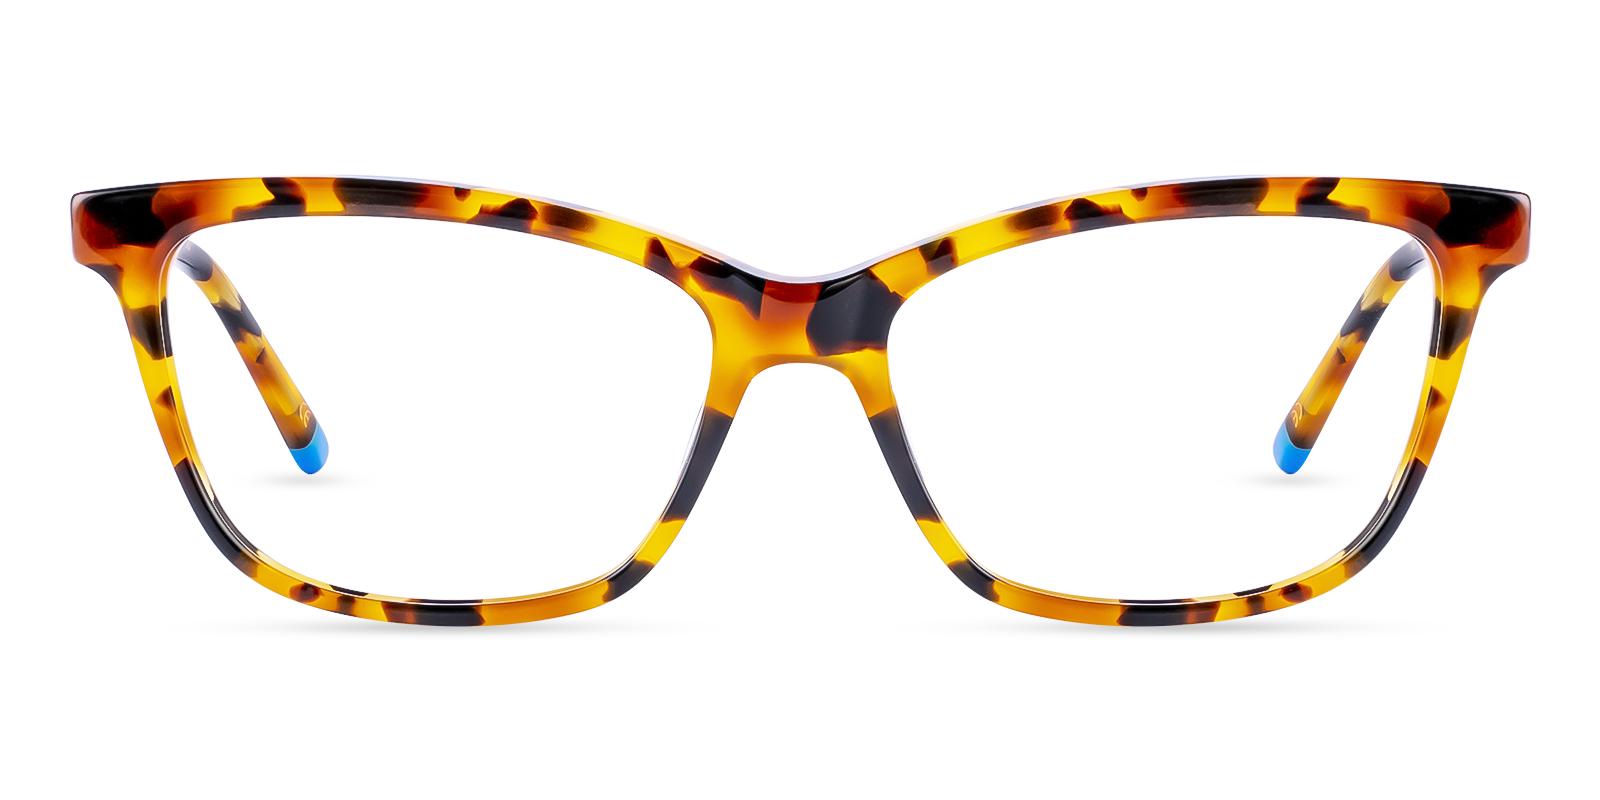 Zion Leopard Acetate Eyeglasses , SpringHinges , UniversalBridgeFit Frames from ABBE Glasses